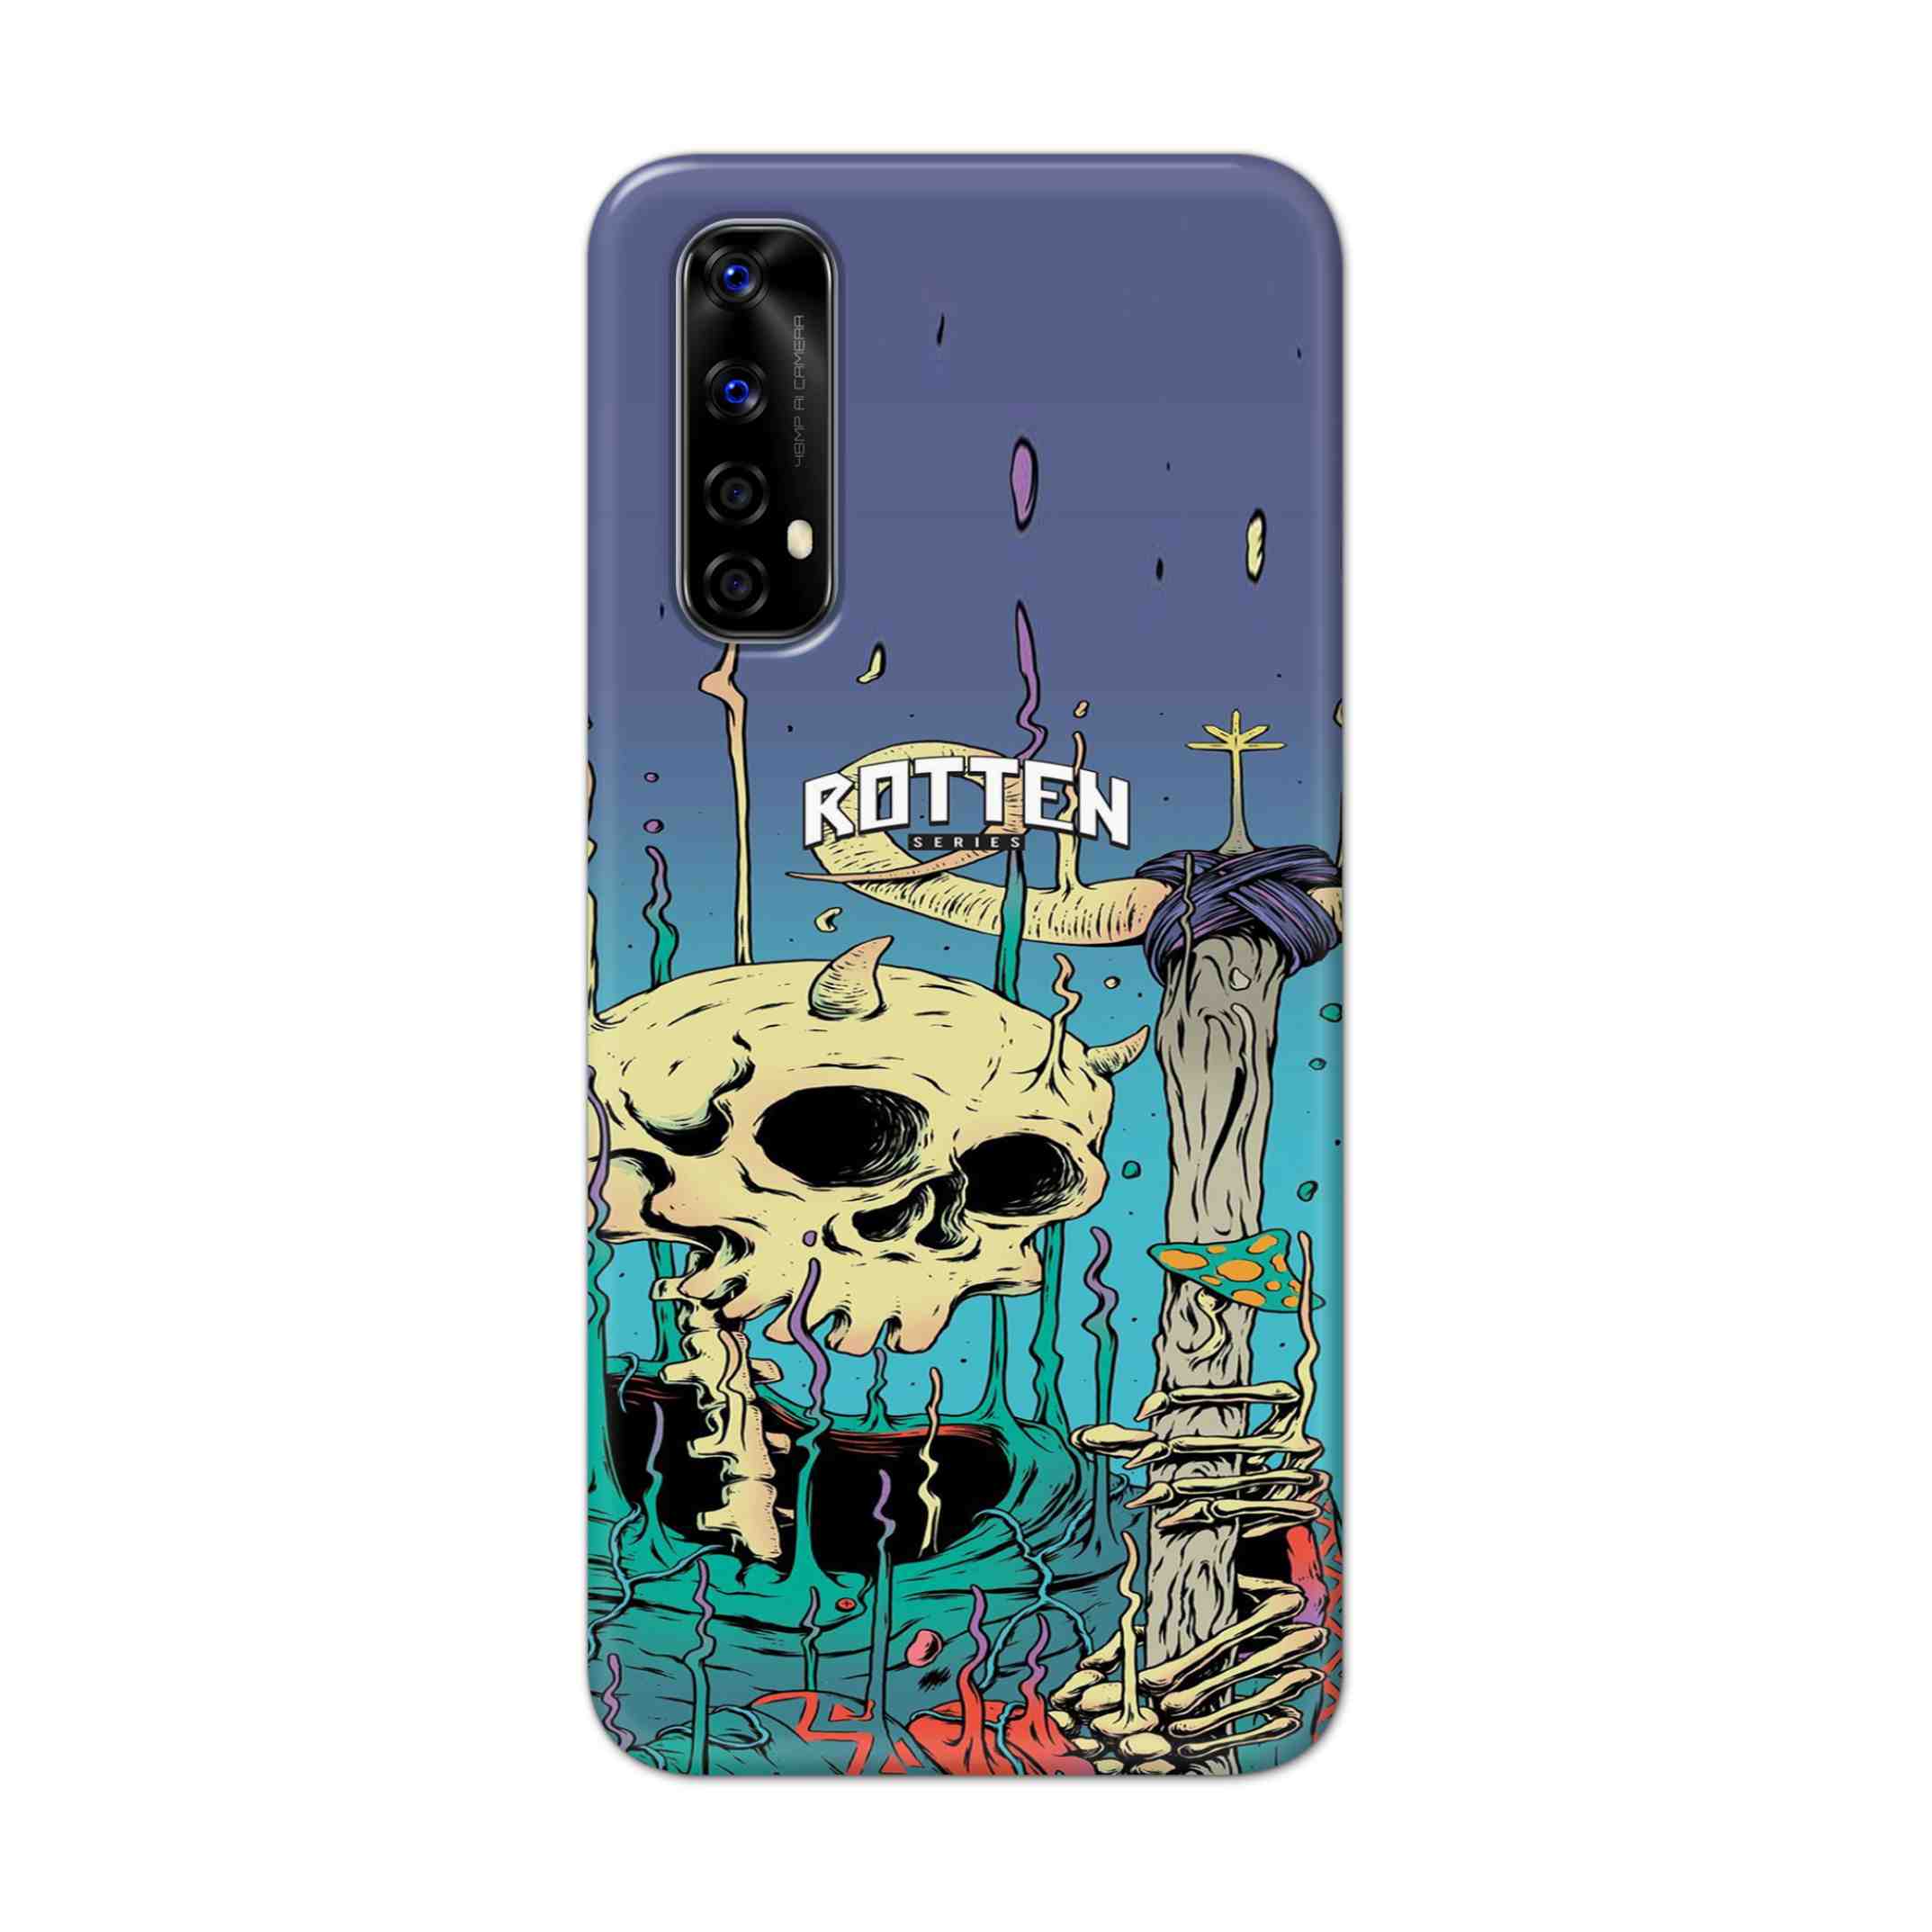 Buy Skull Hard Back Mobile Phone Case Cover For Realme Narzo 20 Pro Online